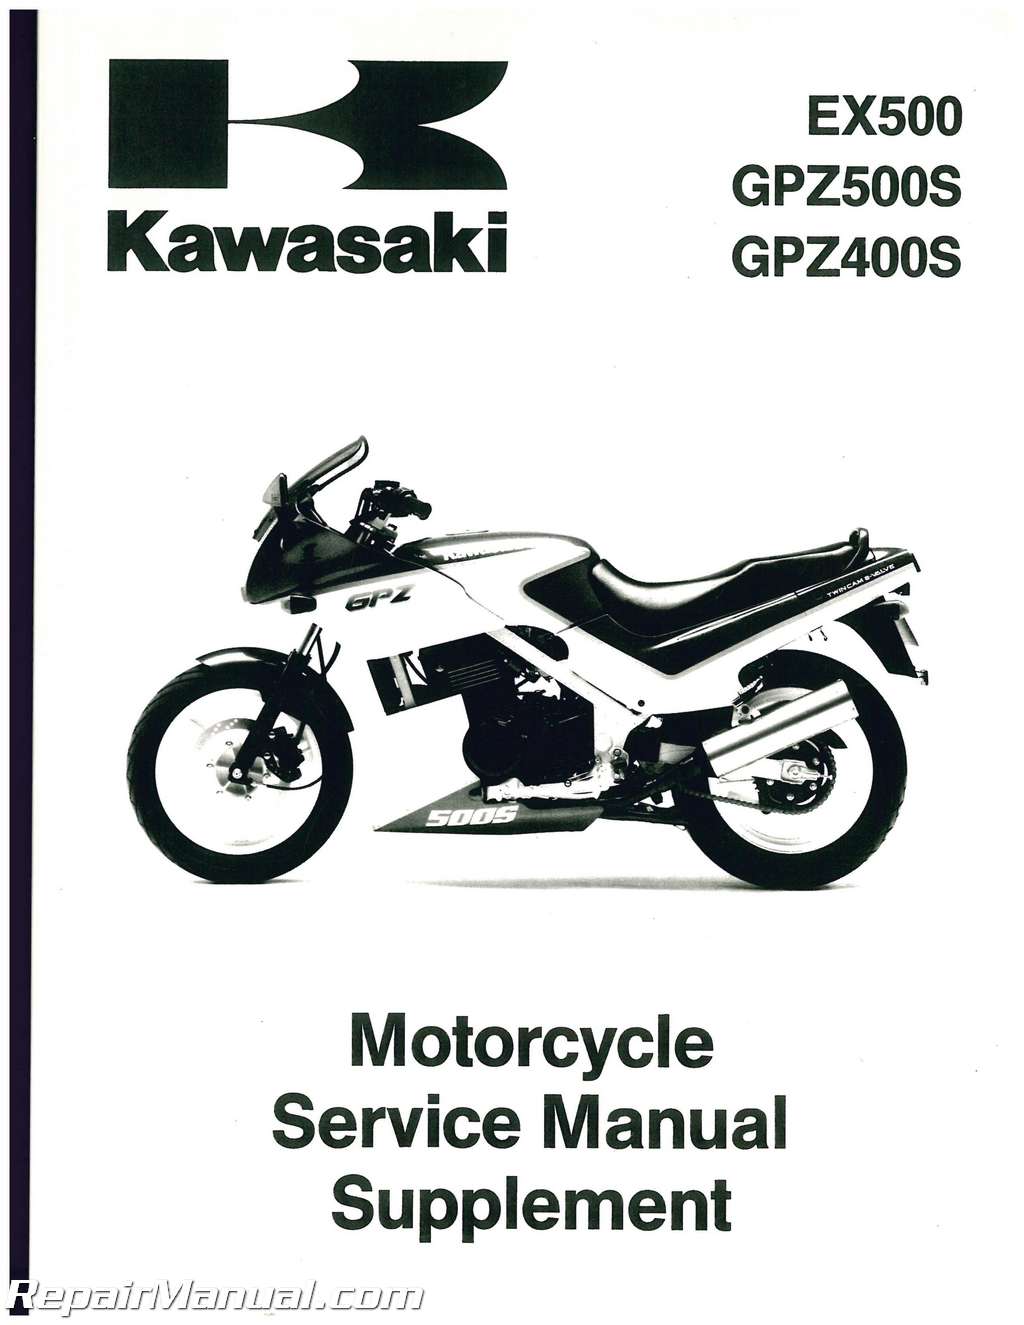 1988 Kawasaki EX500-A1 GPZ Motorcycle Service Manual Supplement